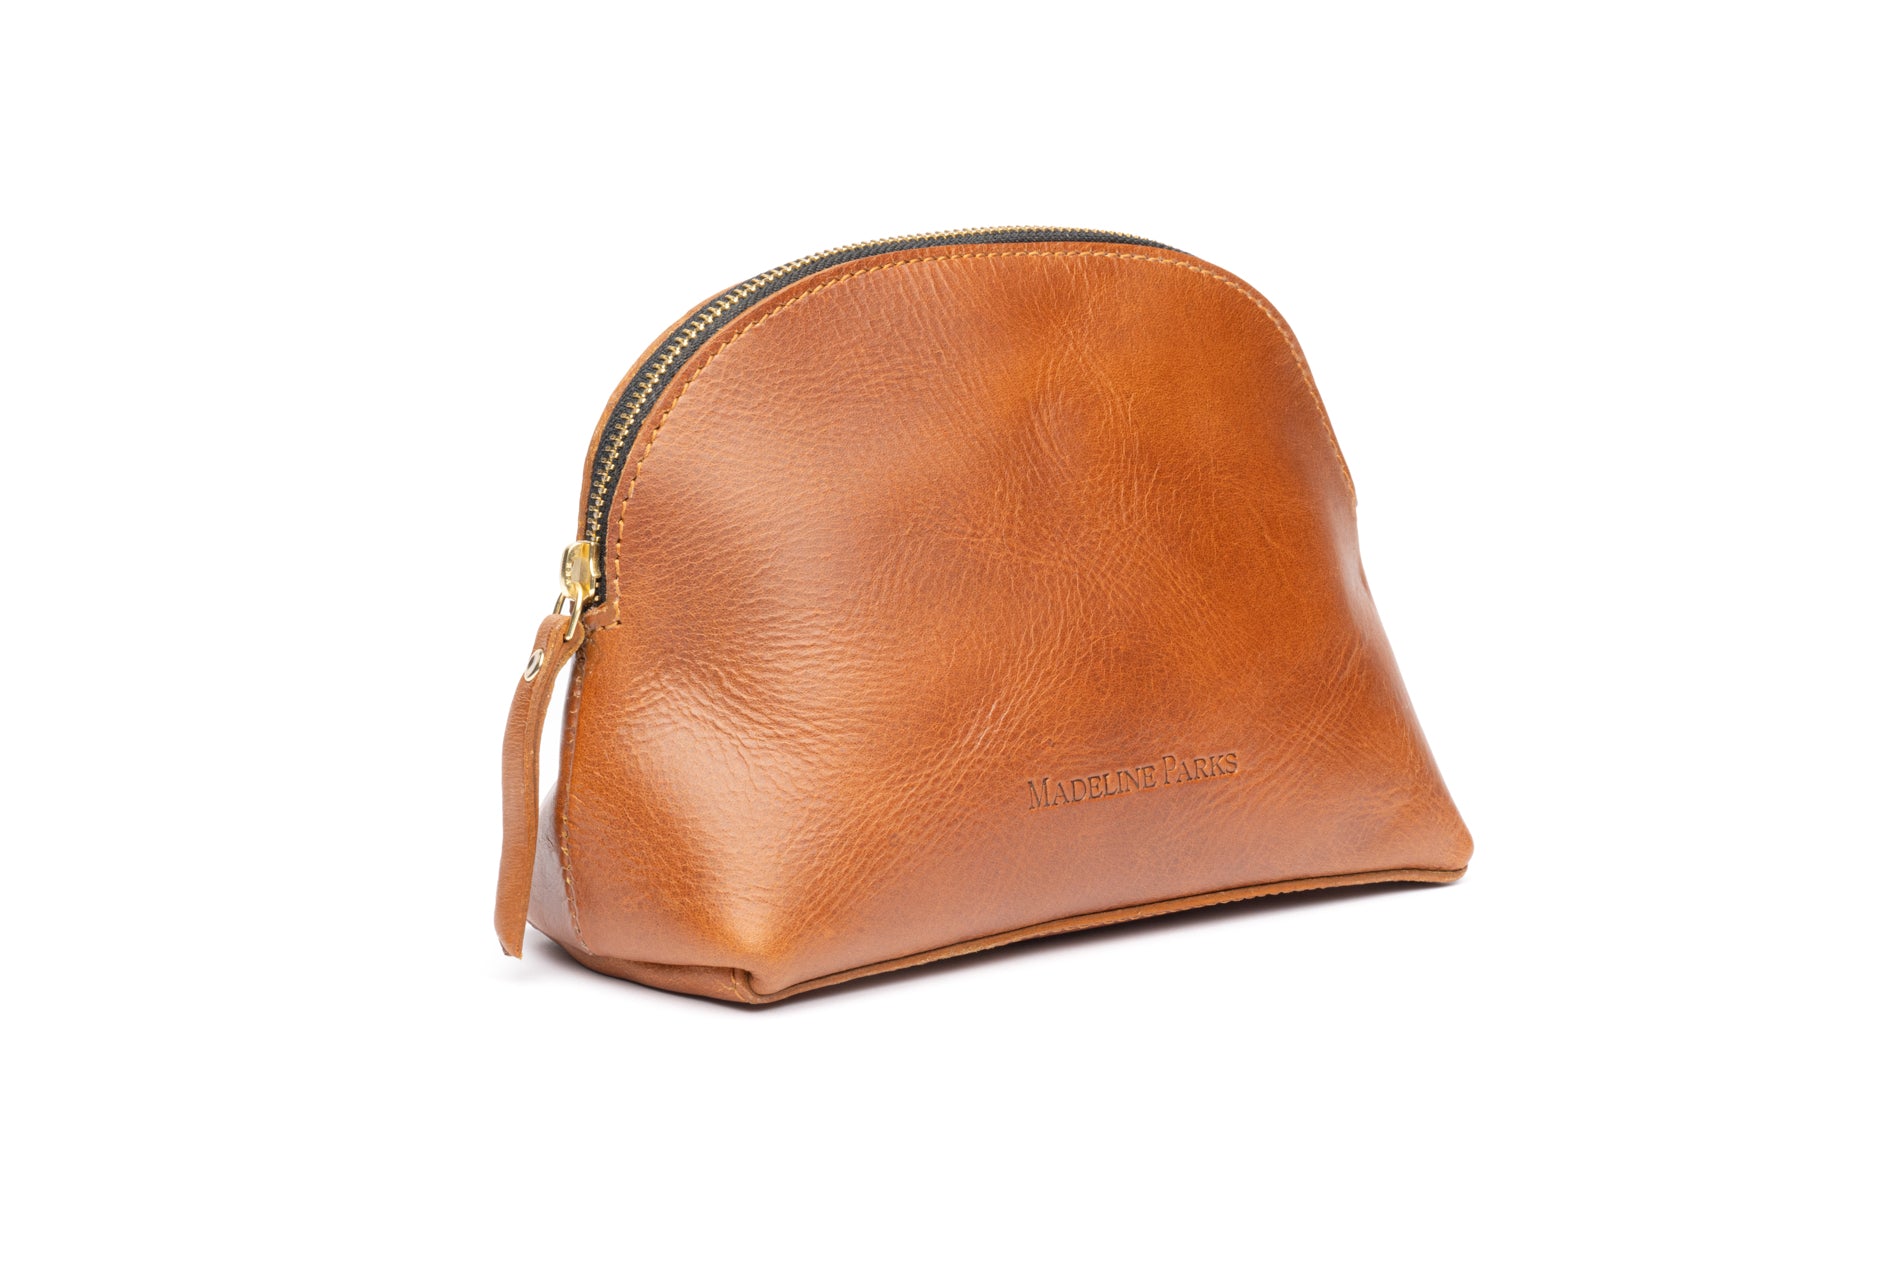 Angle view of Side view of Stylish fashionable brown leather makeup bag 